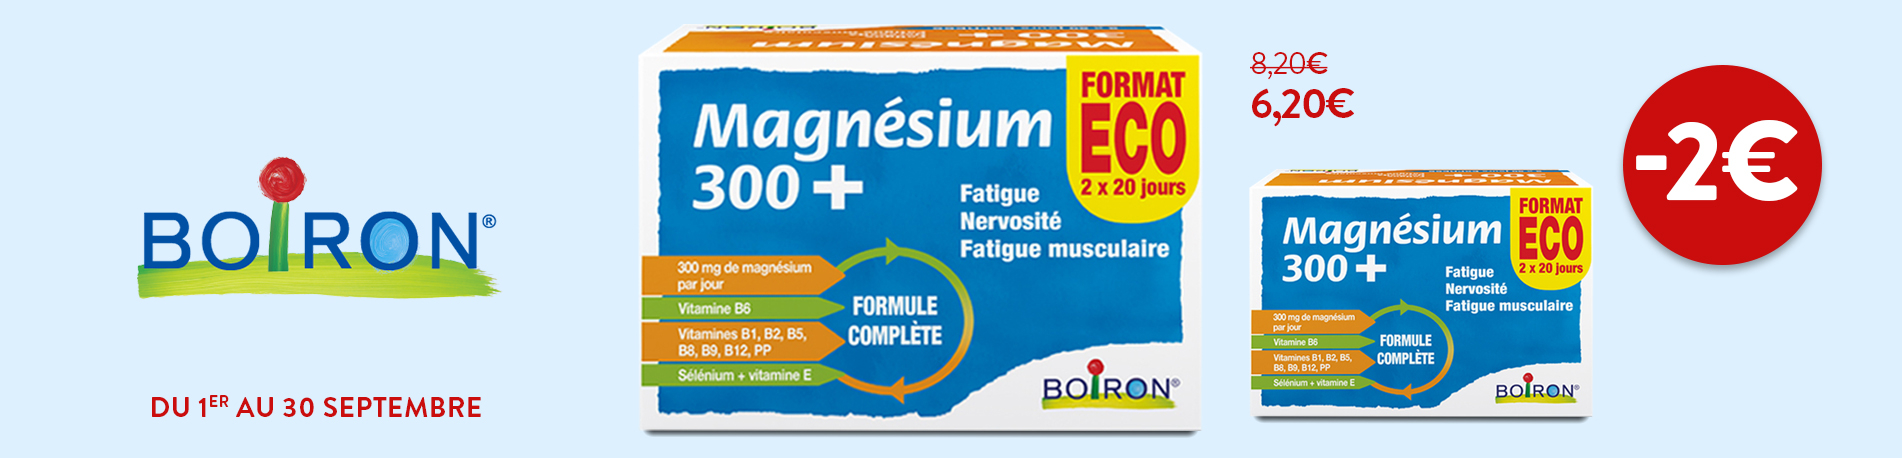 Promotion Boiron Magnésium